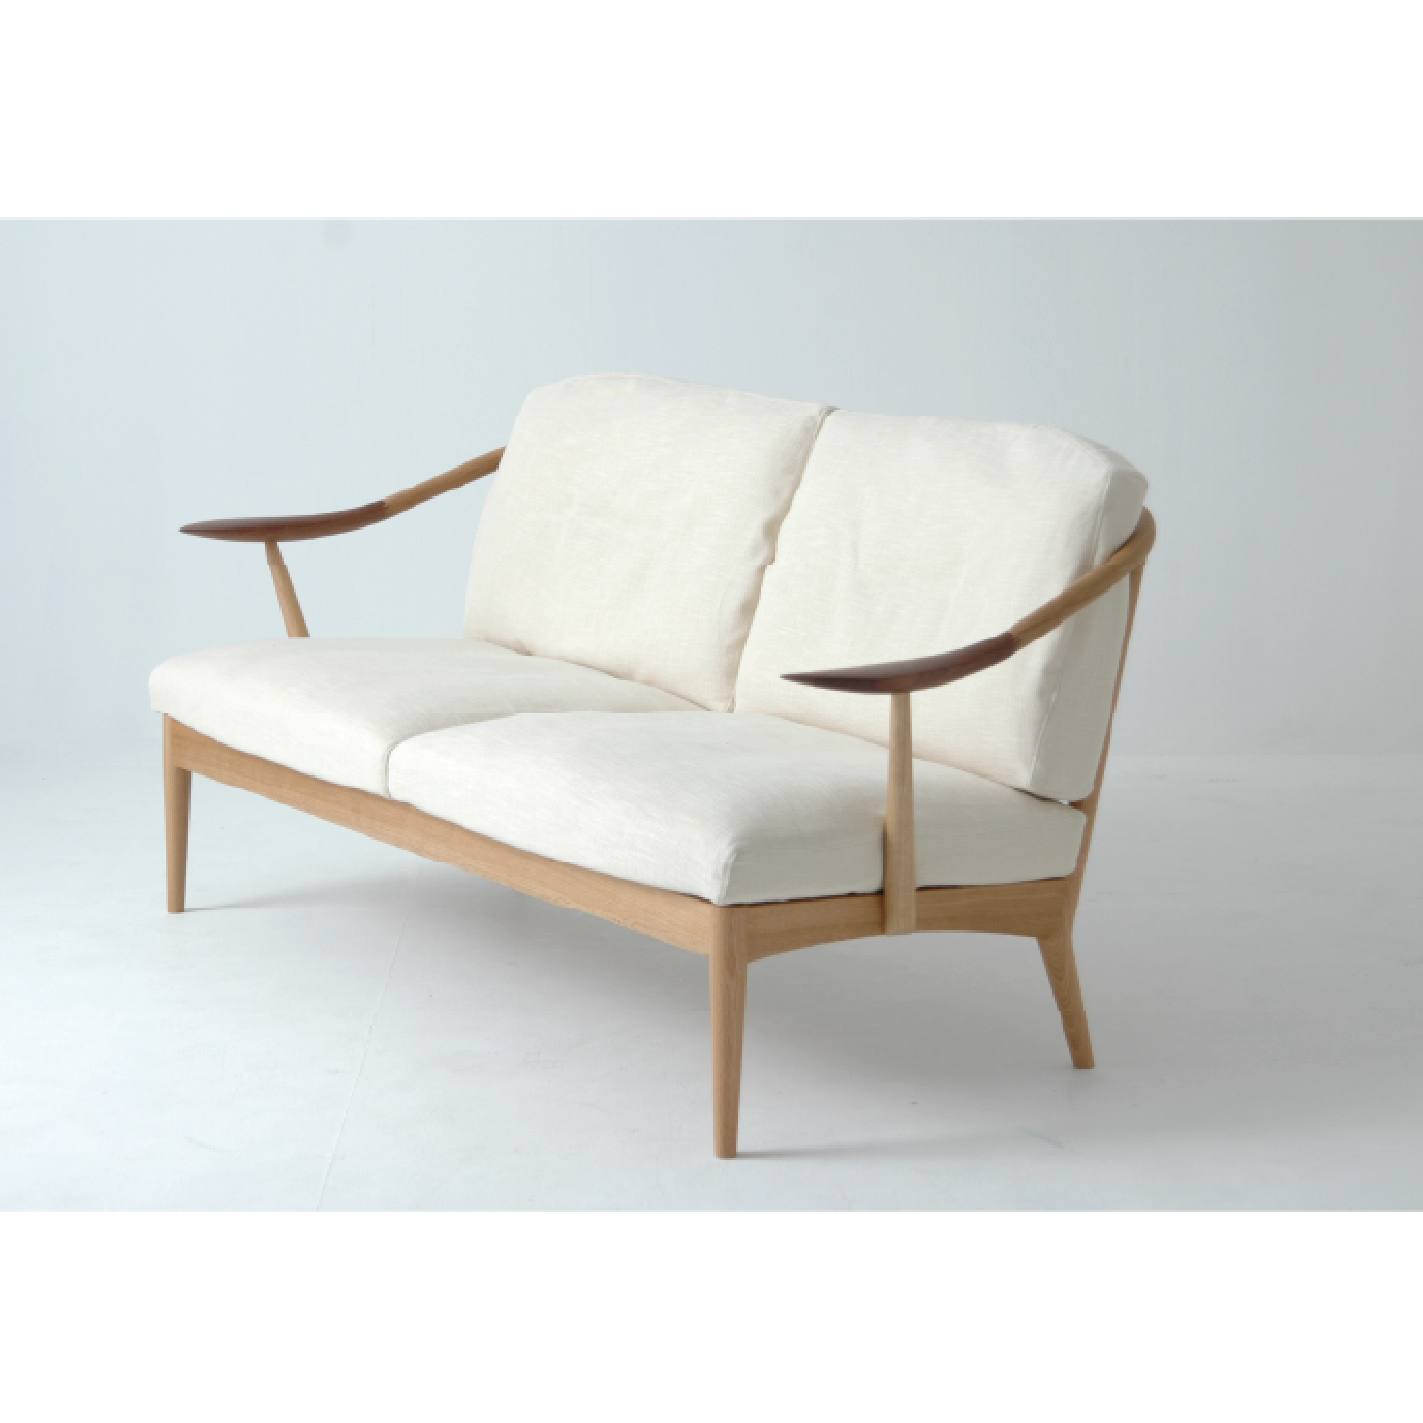 Nissin - White Wood Sofa